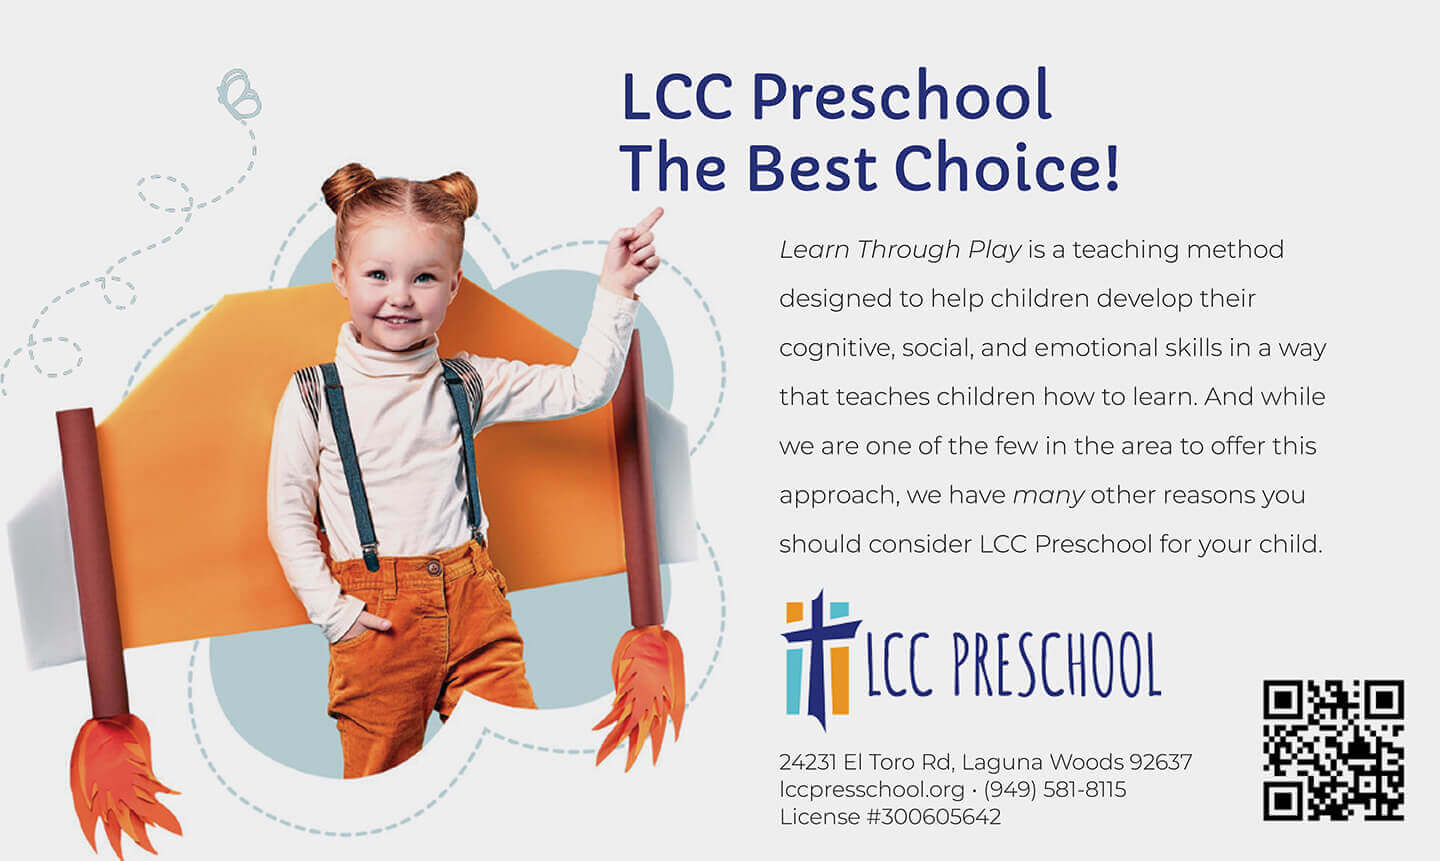 LCC Preschool